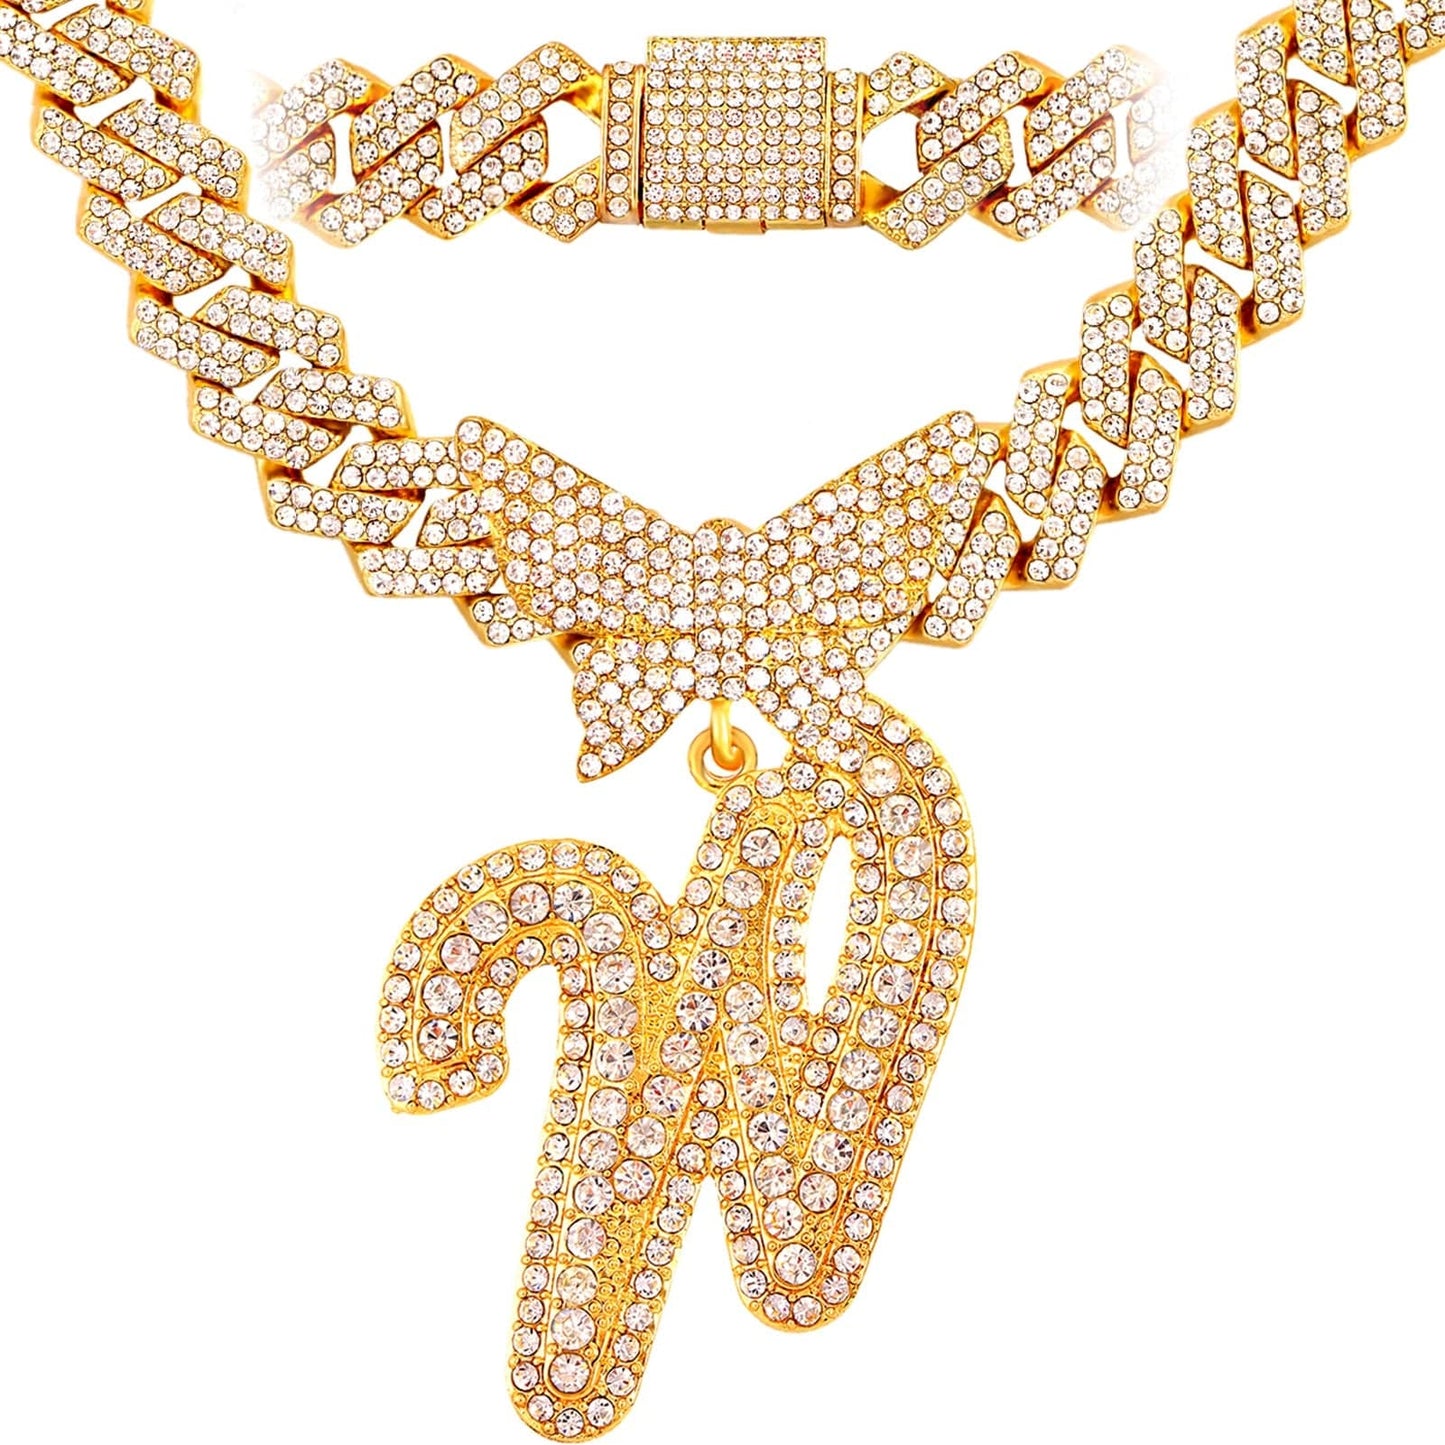 VVS Jewelry hip hop jewelry W / Gold Bling Butterfly Letter Cuban Link Chain